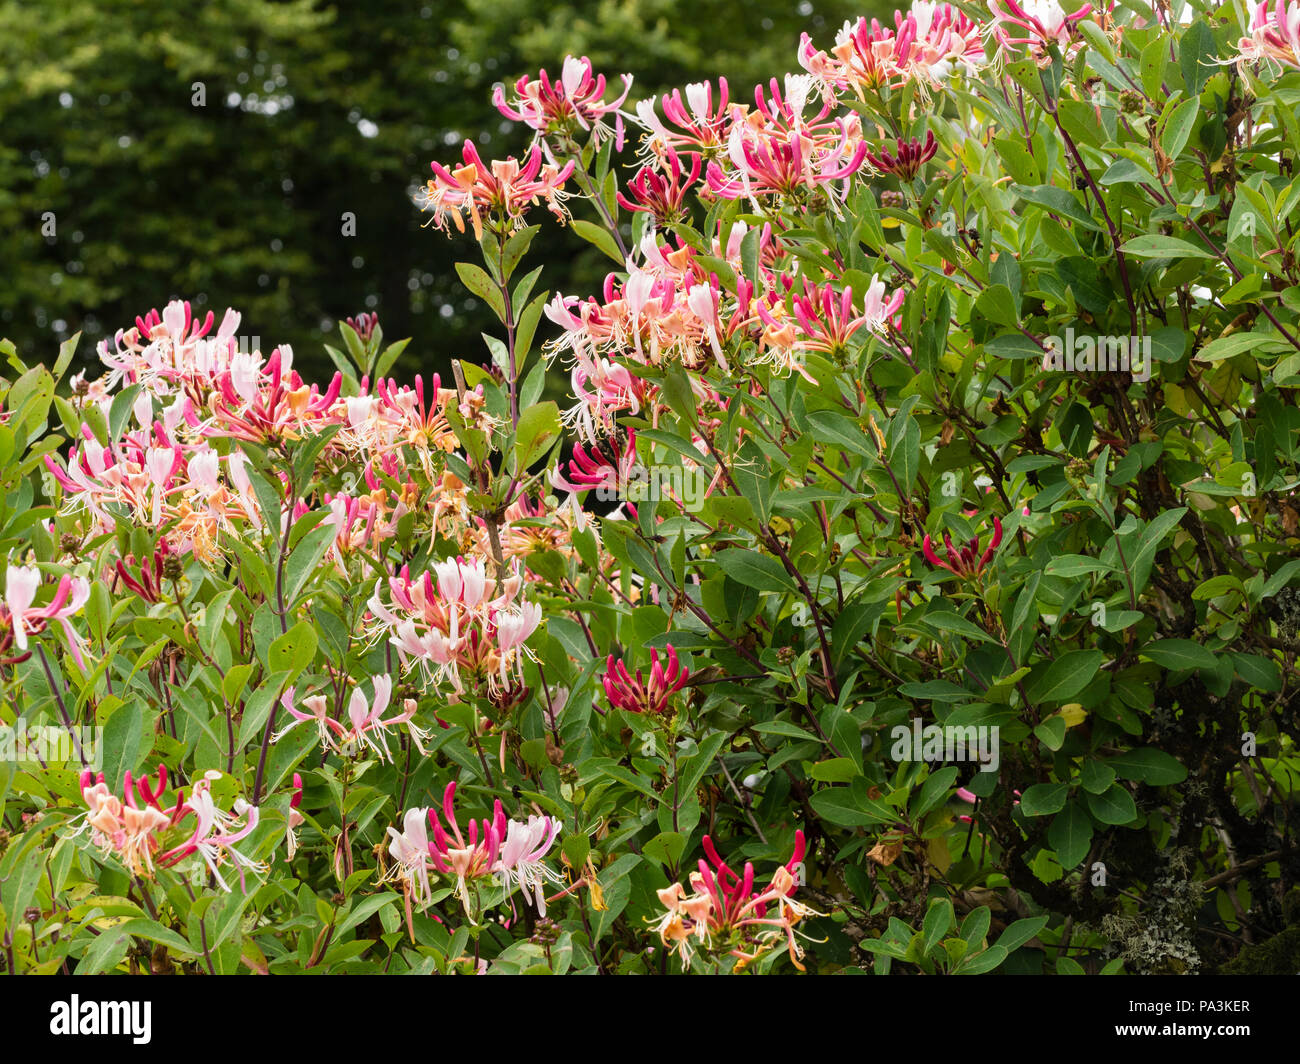 Rosa e bianco fiori profumati di hardy deciduo tardi caprifoglio olandese, Lonicera periclymenum 'Serotina' Foto Stock